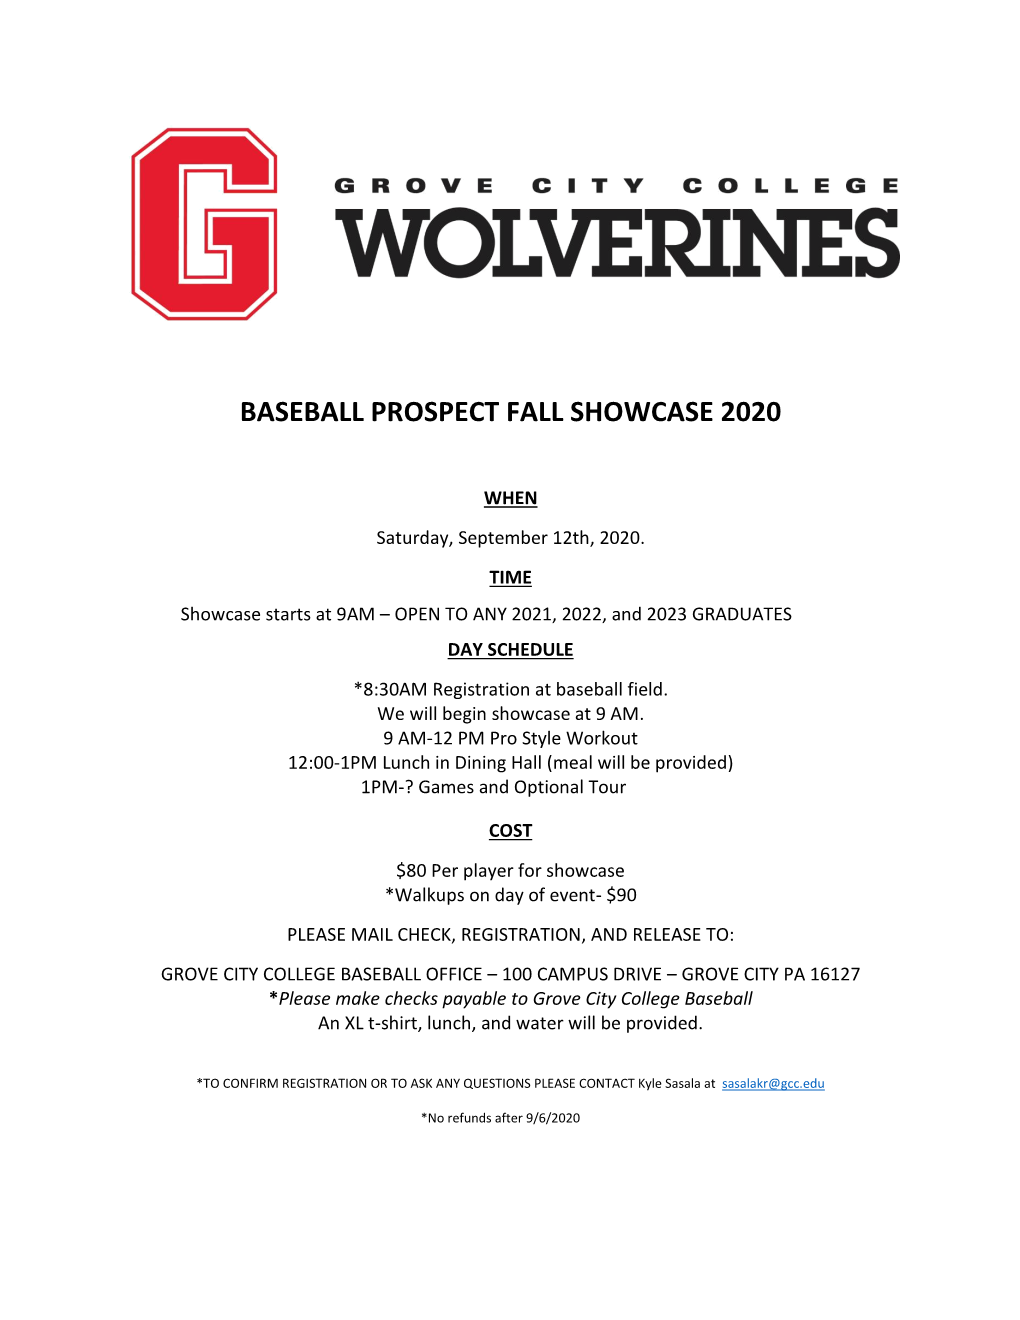 Baseball Prospect Fall Showcase 2020